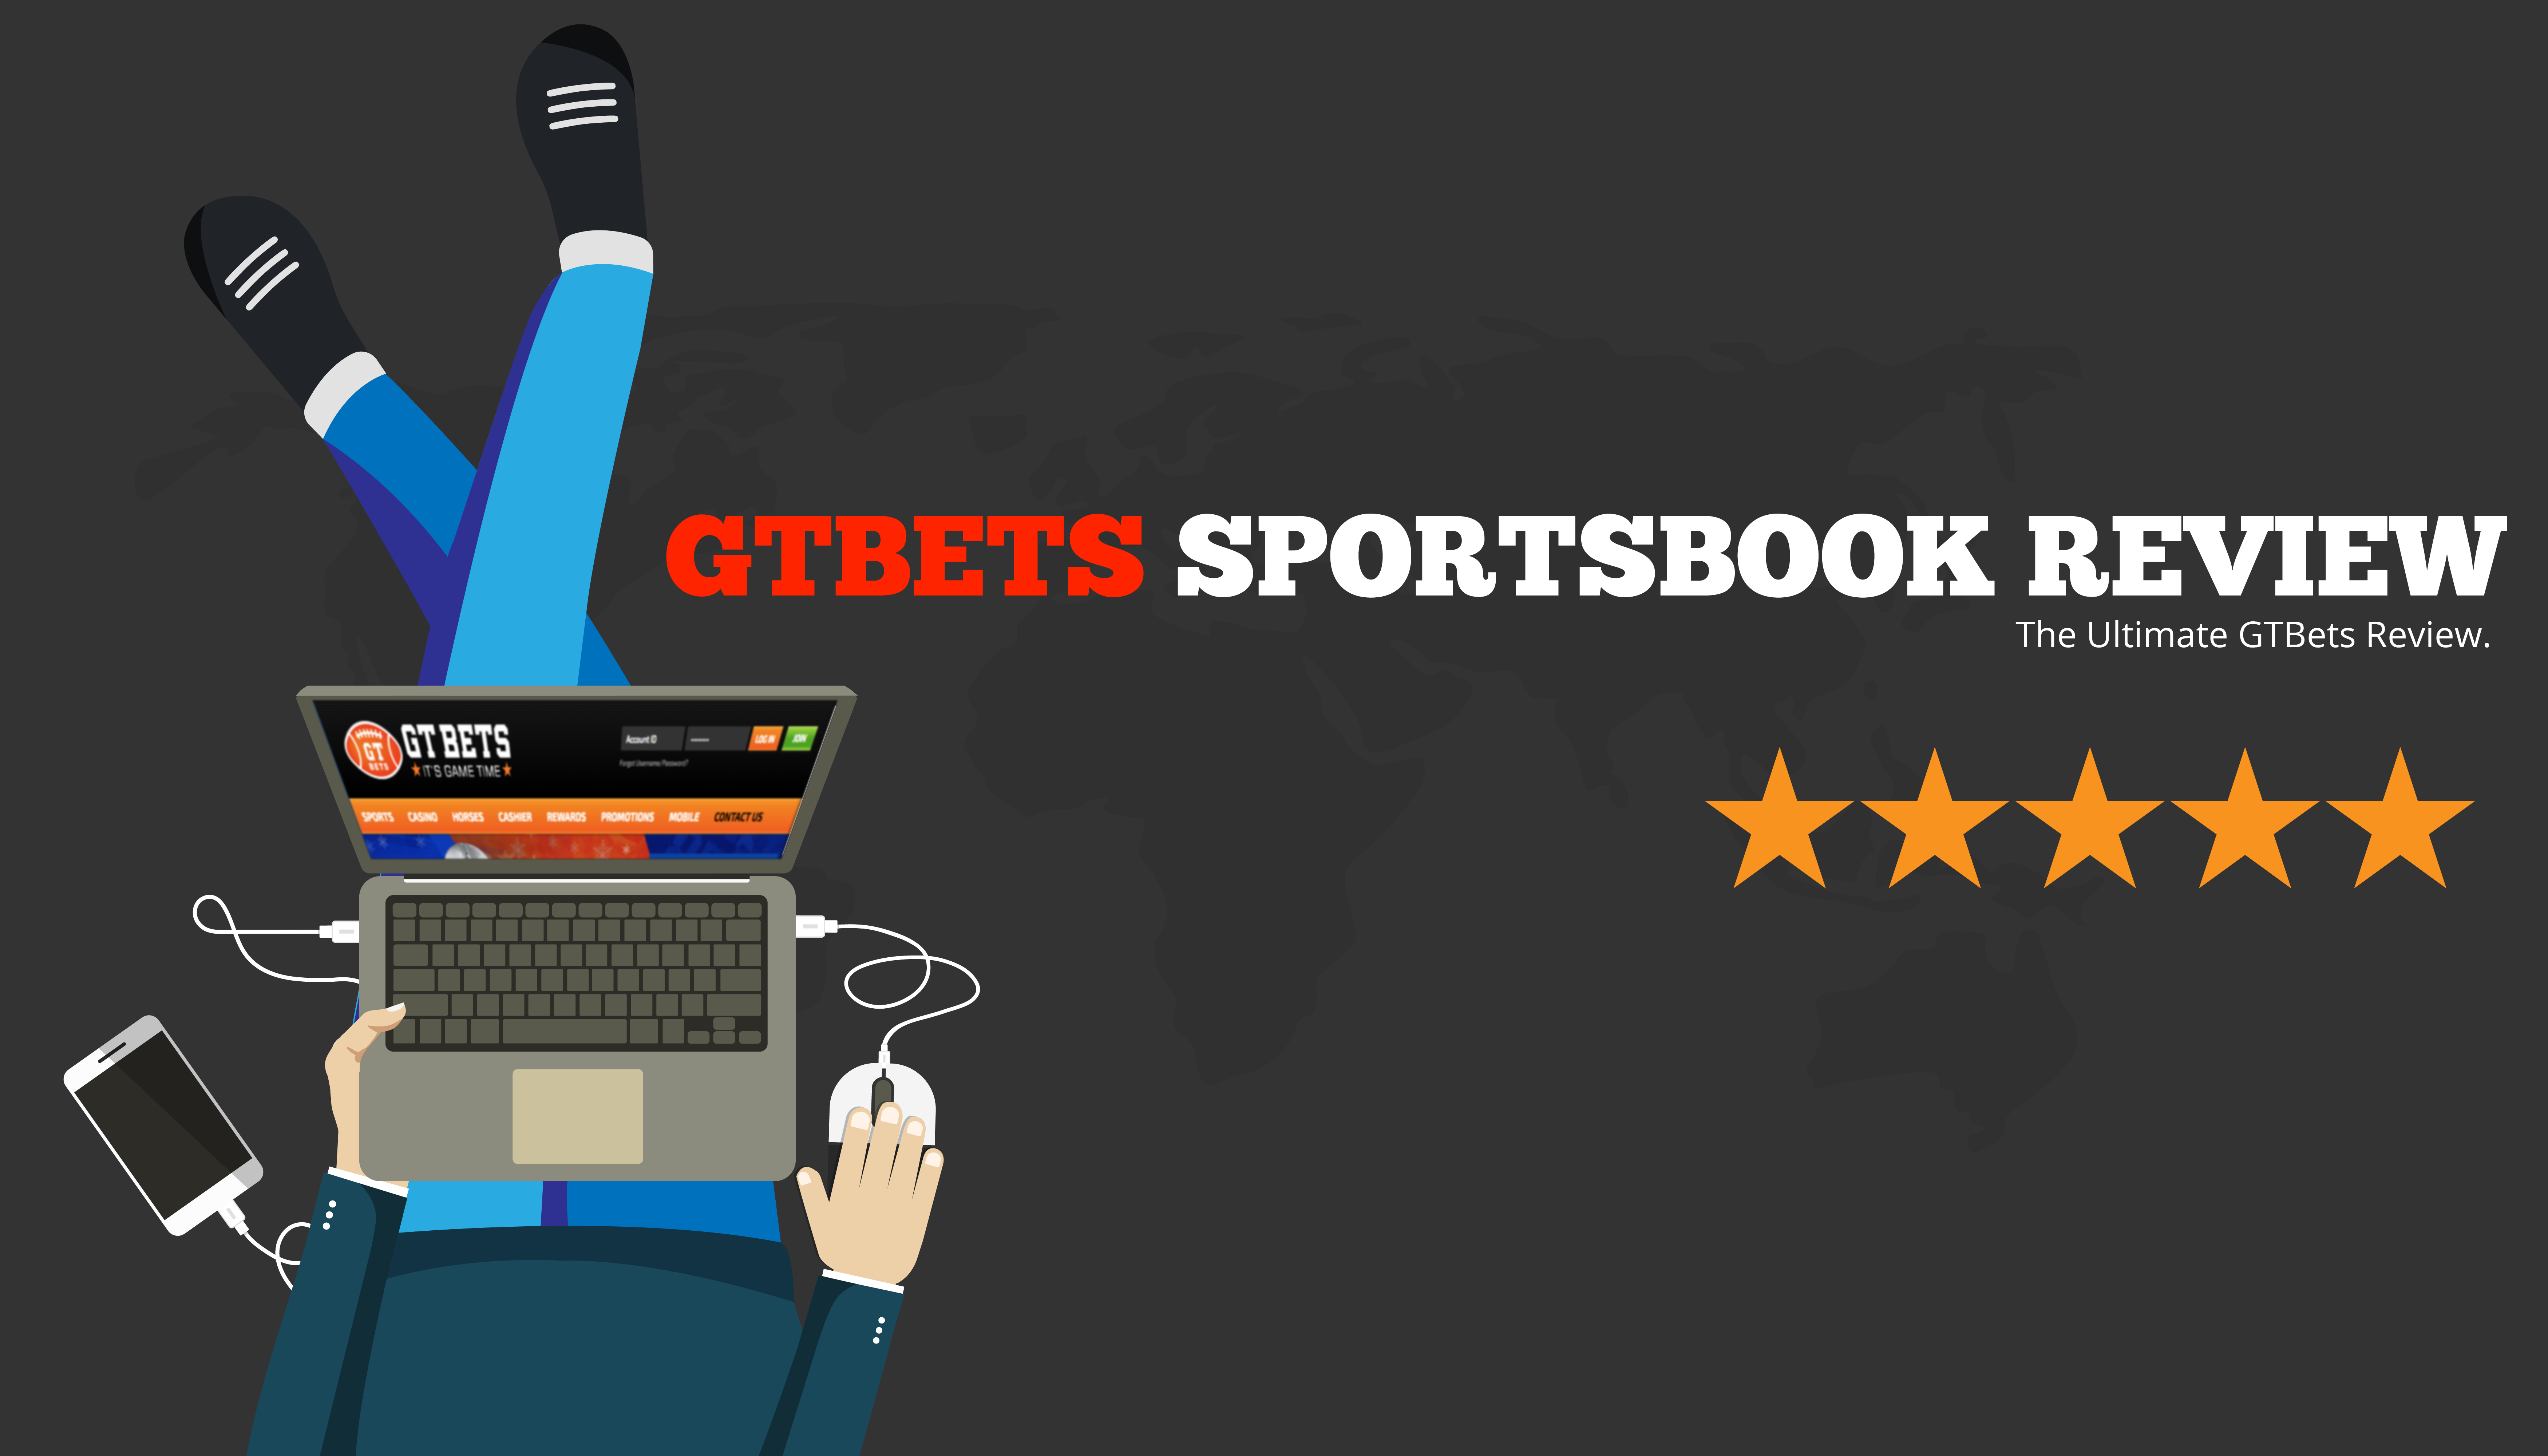 GTBets Sportsbook Review